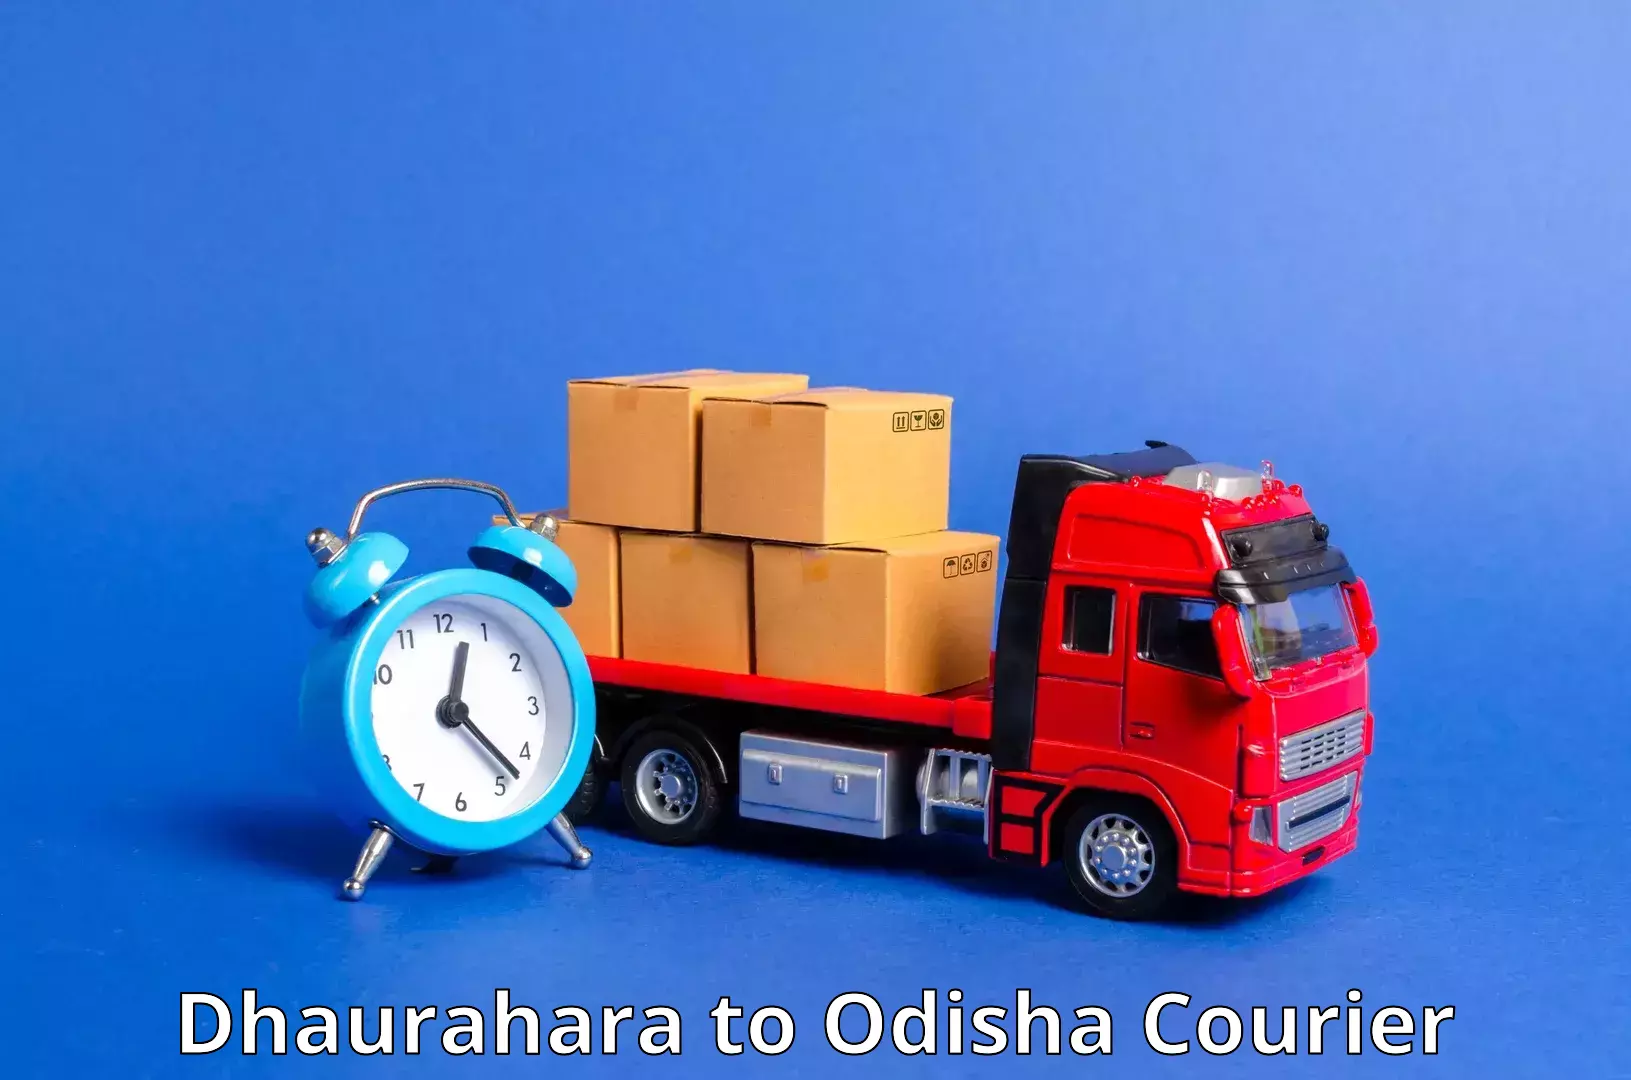 Next day courier in Dhaurahara to Tikiri